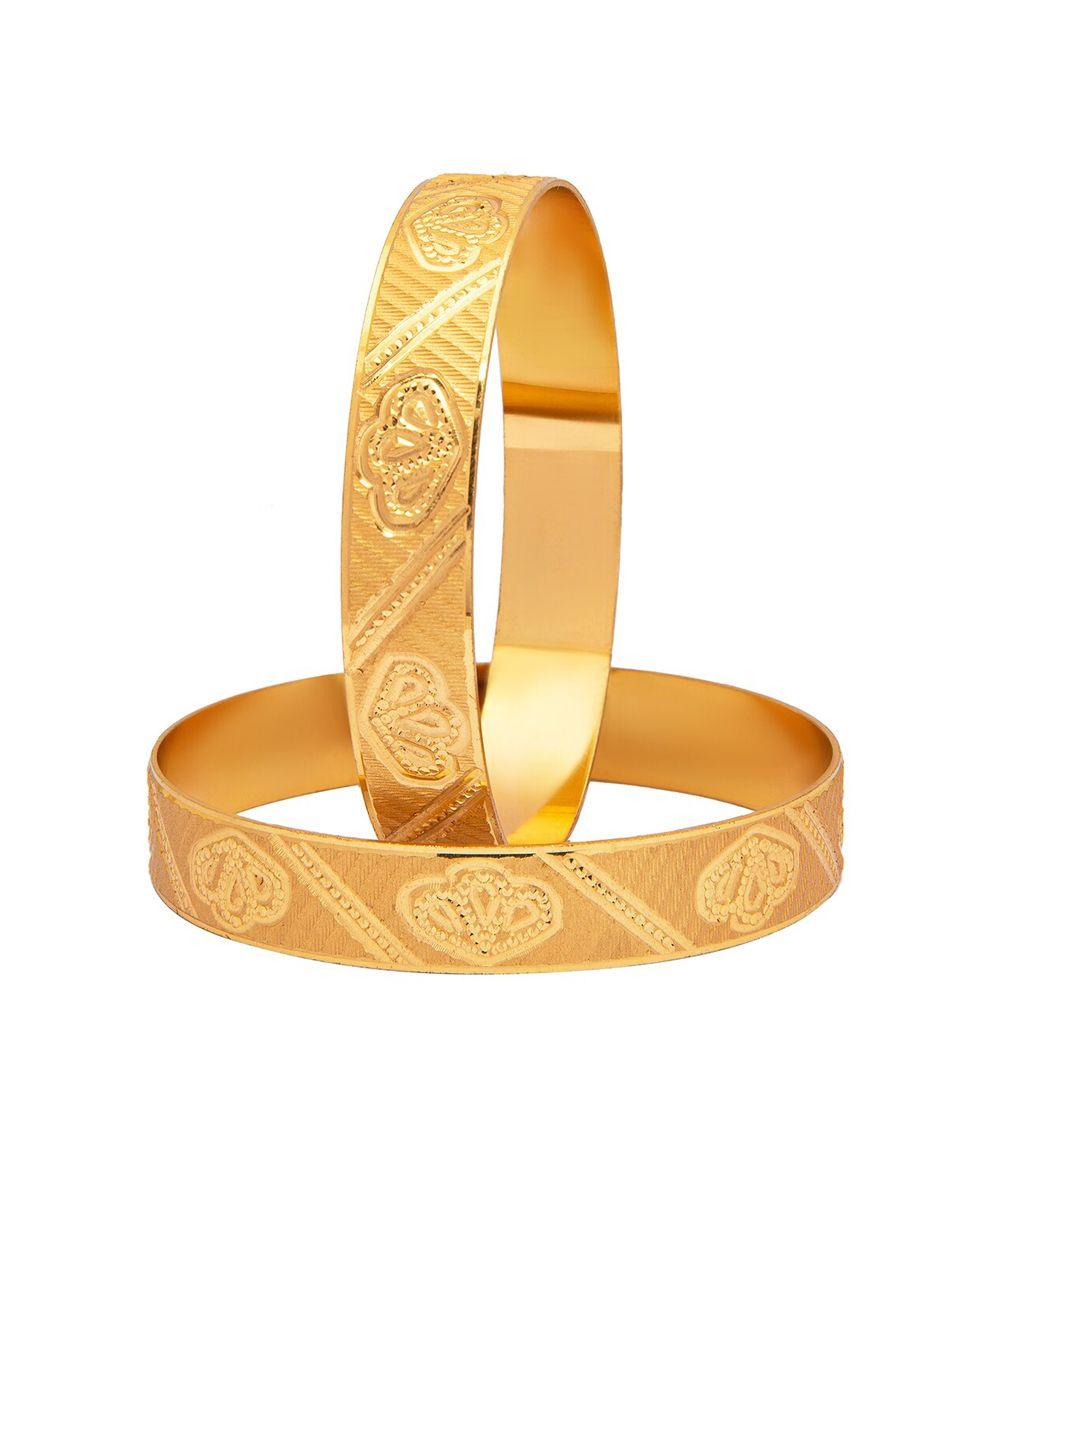 shining jewel - by shivansh set of 2 gold-plated gold-toned designer bangle